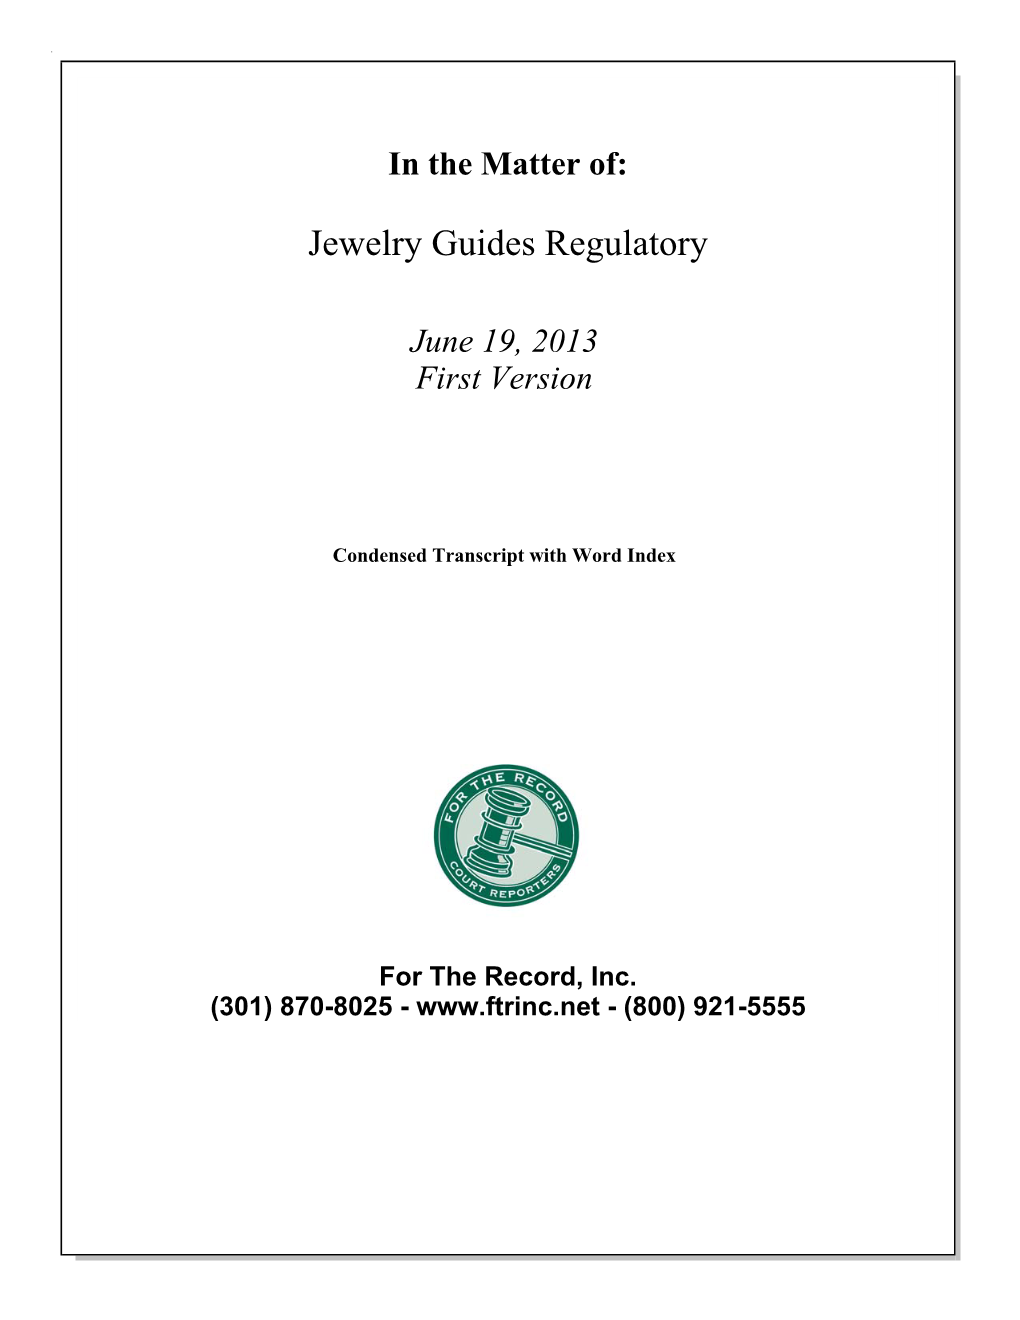 Jewelry Guides Regulatory